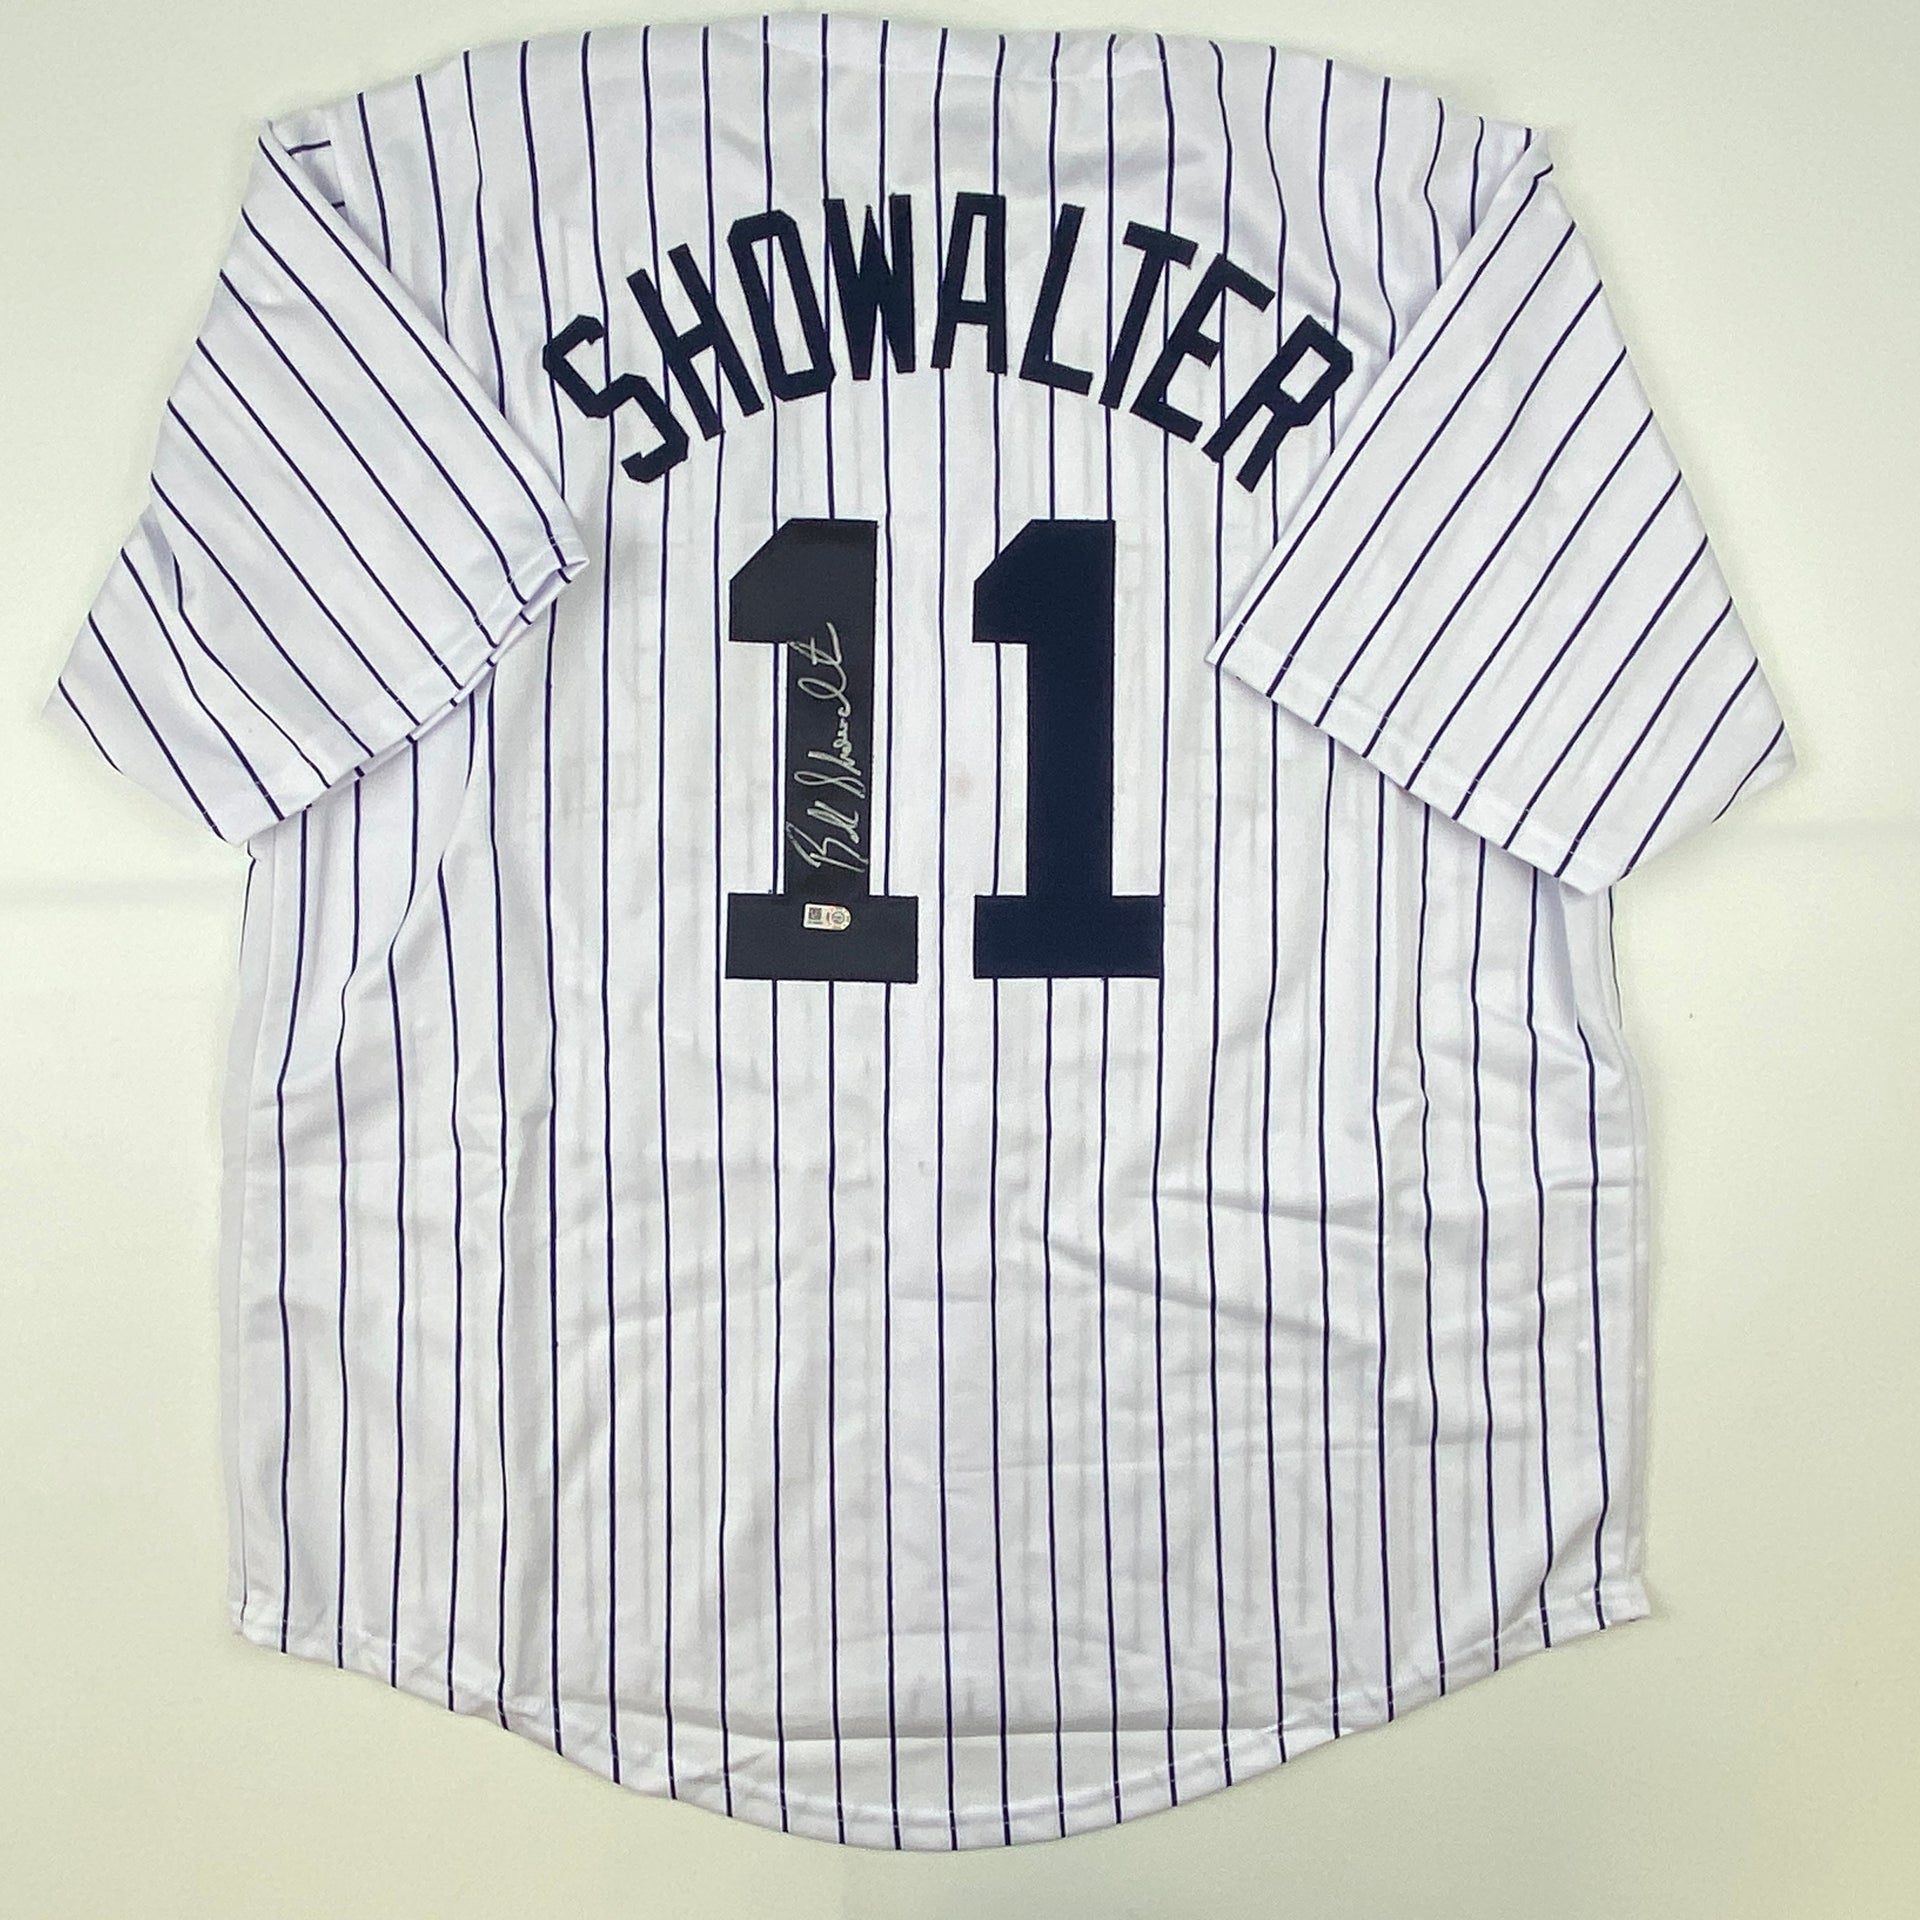 Autographed/Signed Buck Showalter New York Pinstripe Baseball Jersey MLB COA  - Hall of Fame Sports Memorabilia